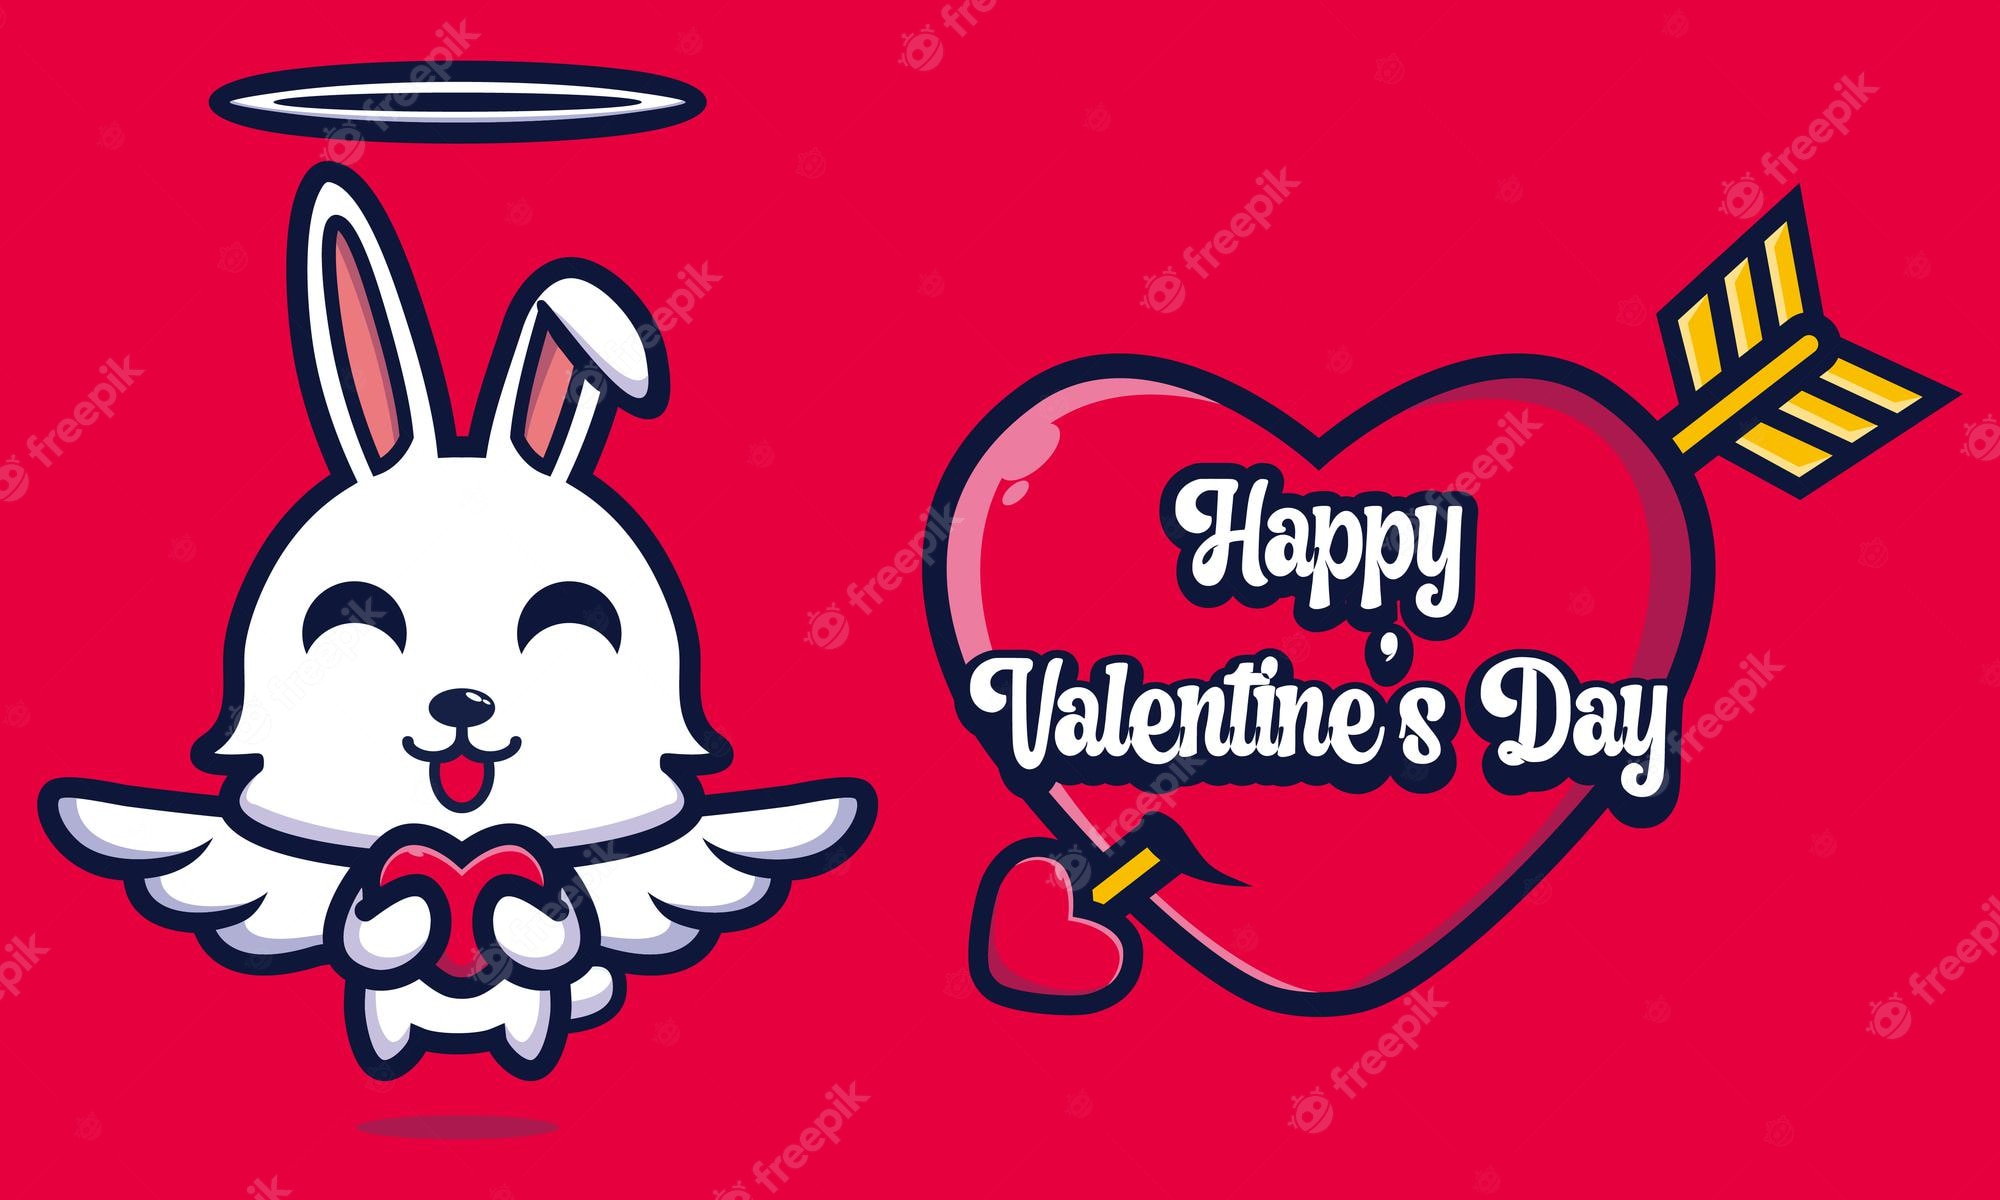 Premium Vector. Cute cartoon rabbit with happy valentines day greetings